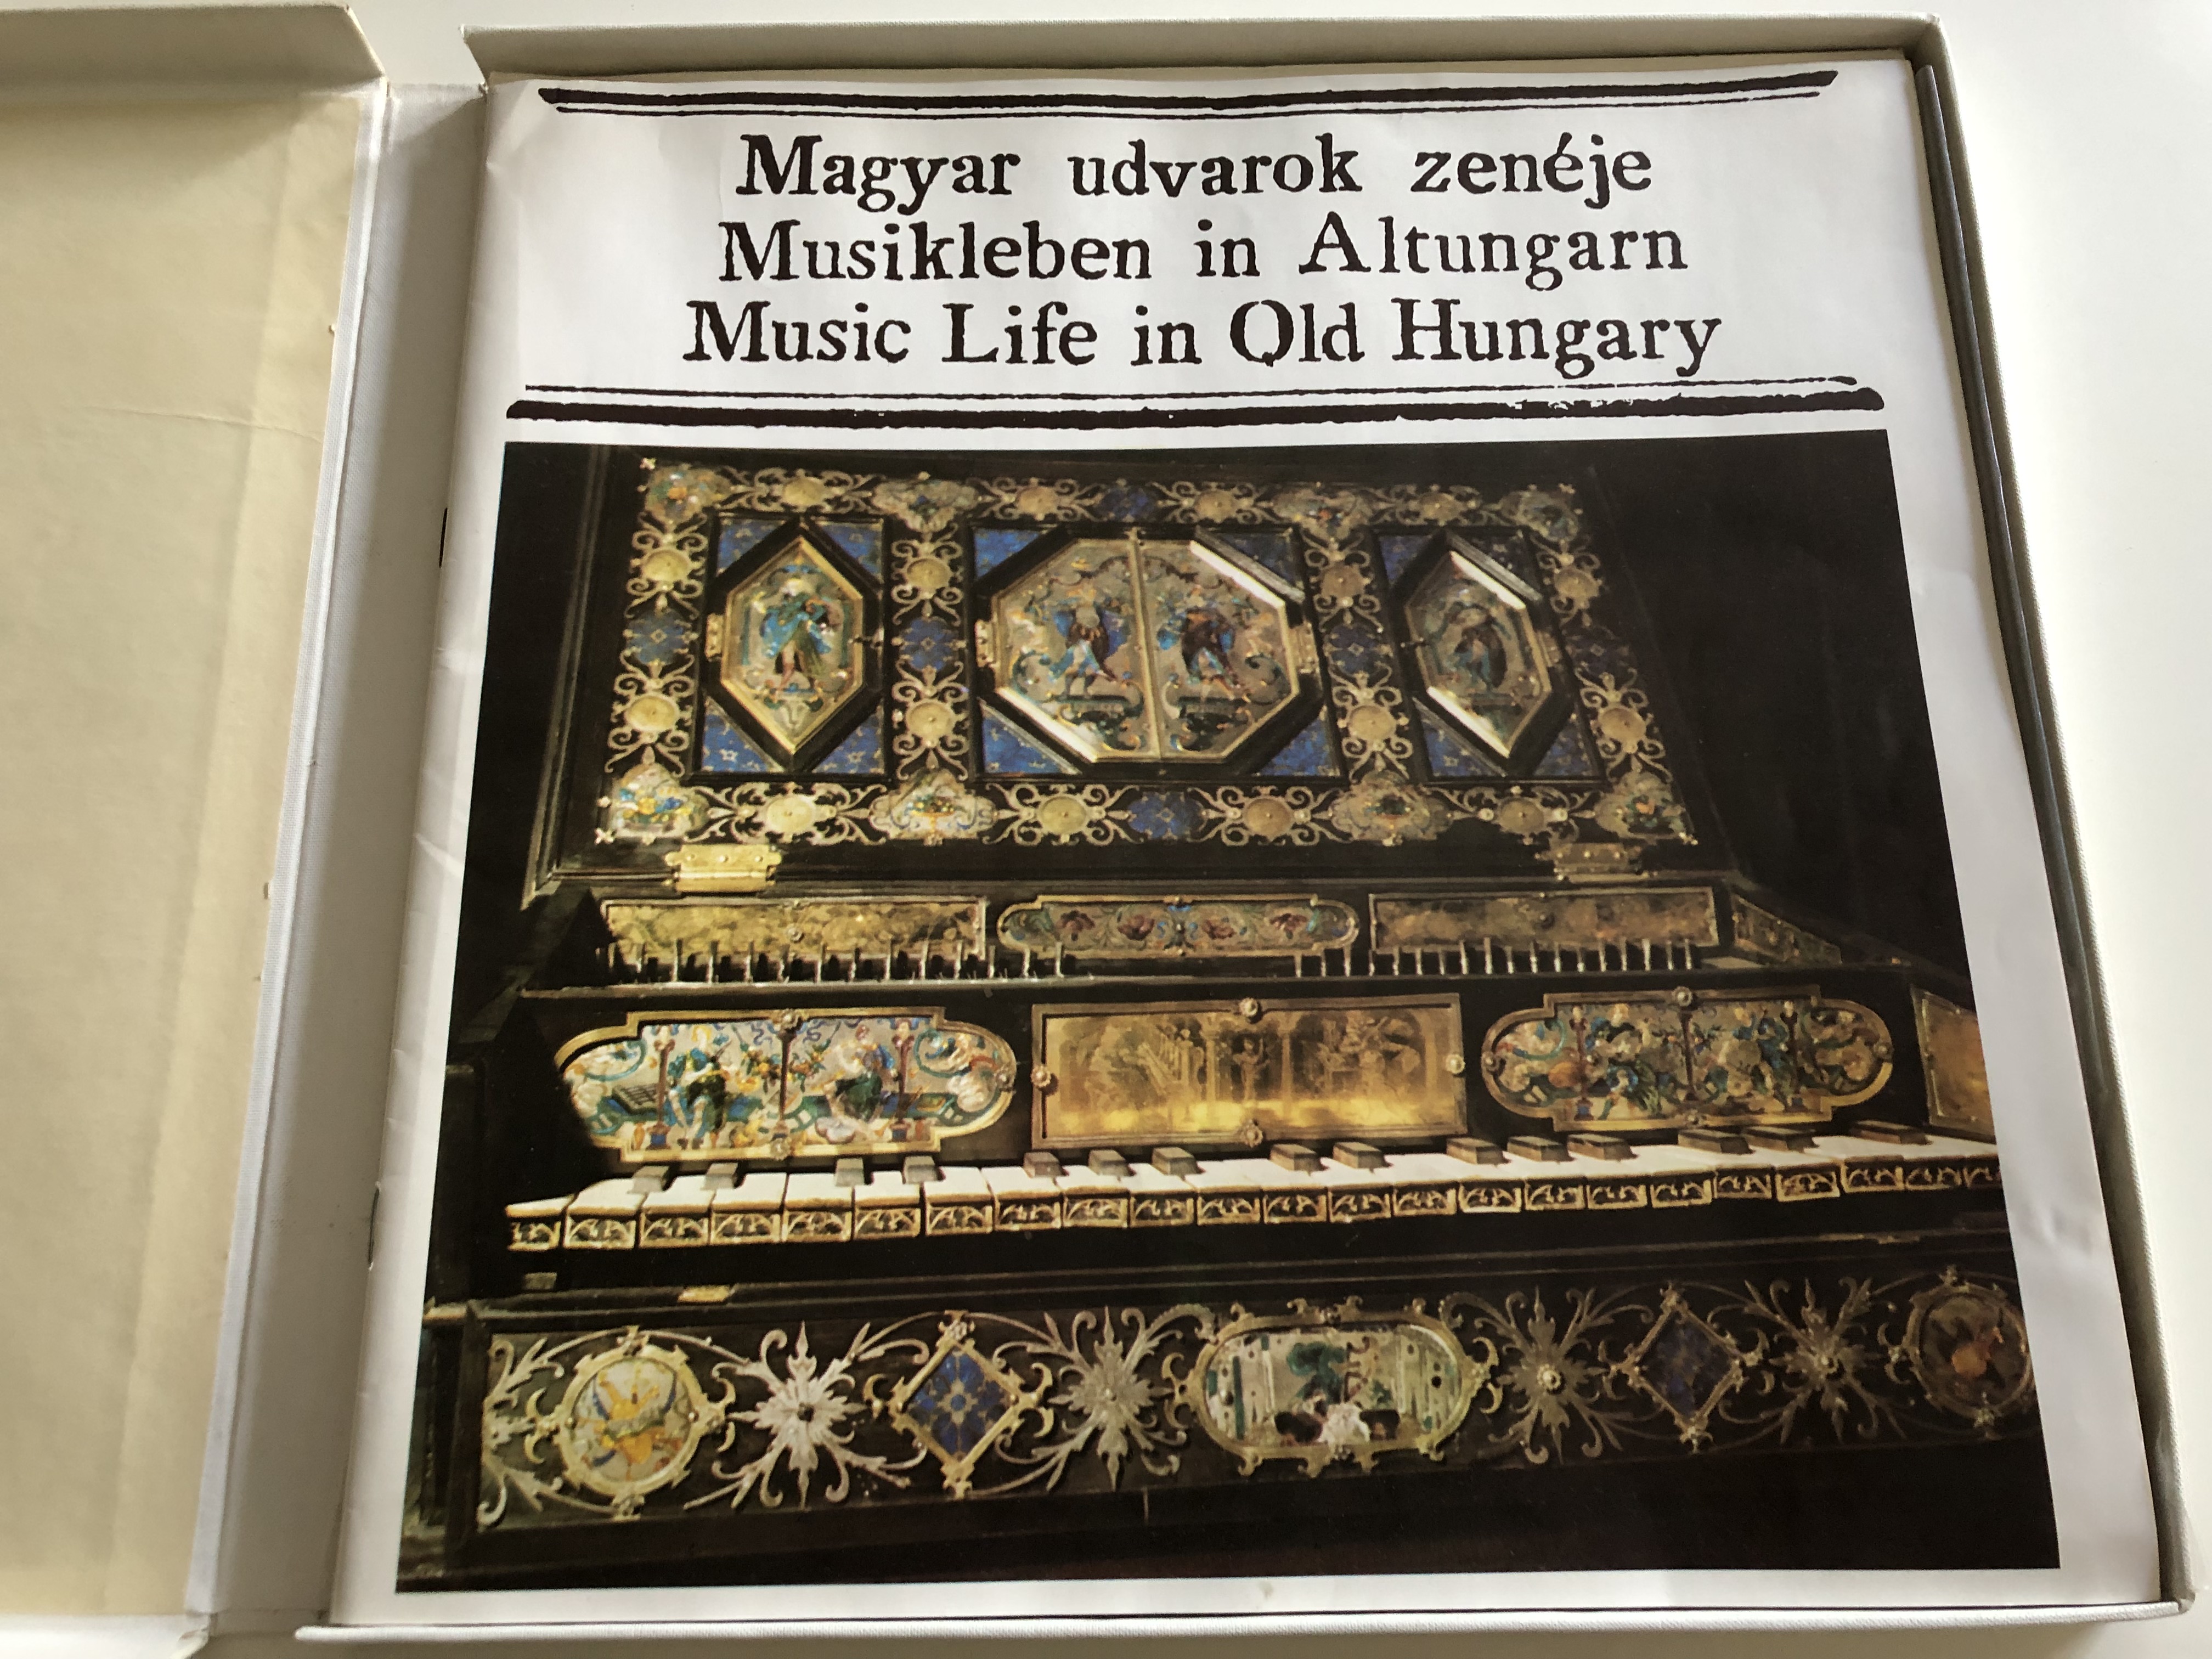 music-life-in-old-hungary-13th-18th-century-conducted-frigyes-s-ndor-istv-n-p-rkai-istv-n-kis-l-szl-dobszay-mikl-s-erd-lyi-hungaroton-3x-lp-stereo-mono-slpx-11491-93.jpg